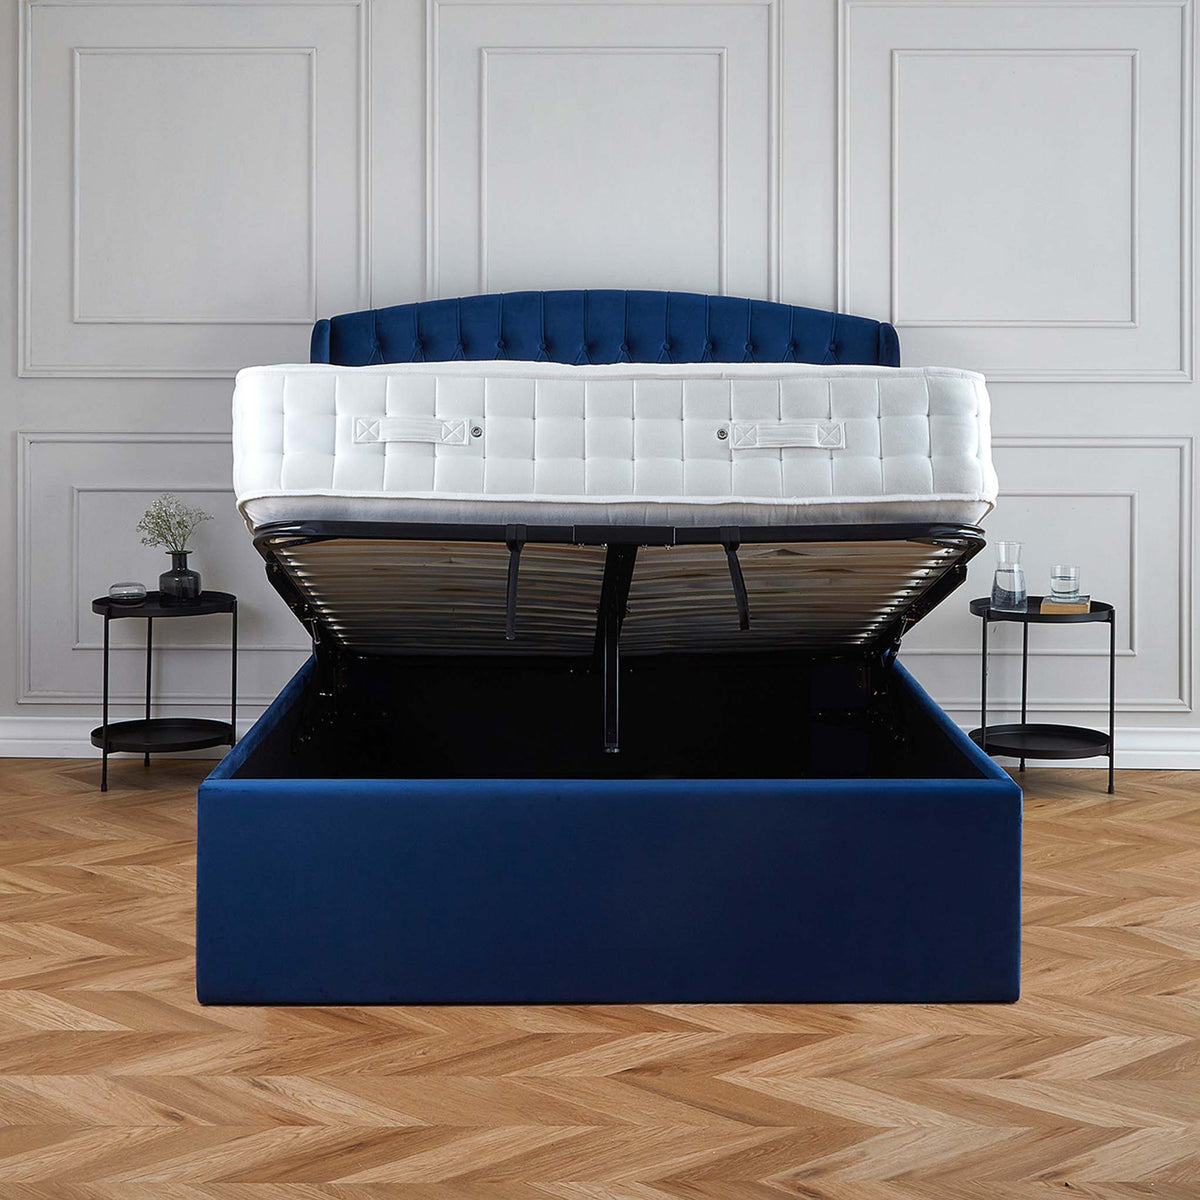 Salisbury Blue Ottoman Storage Bed Frame